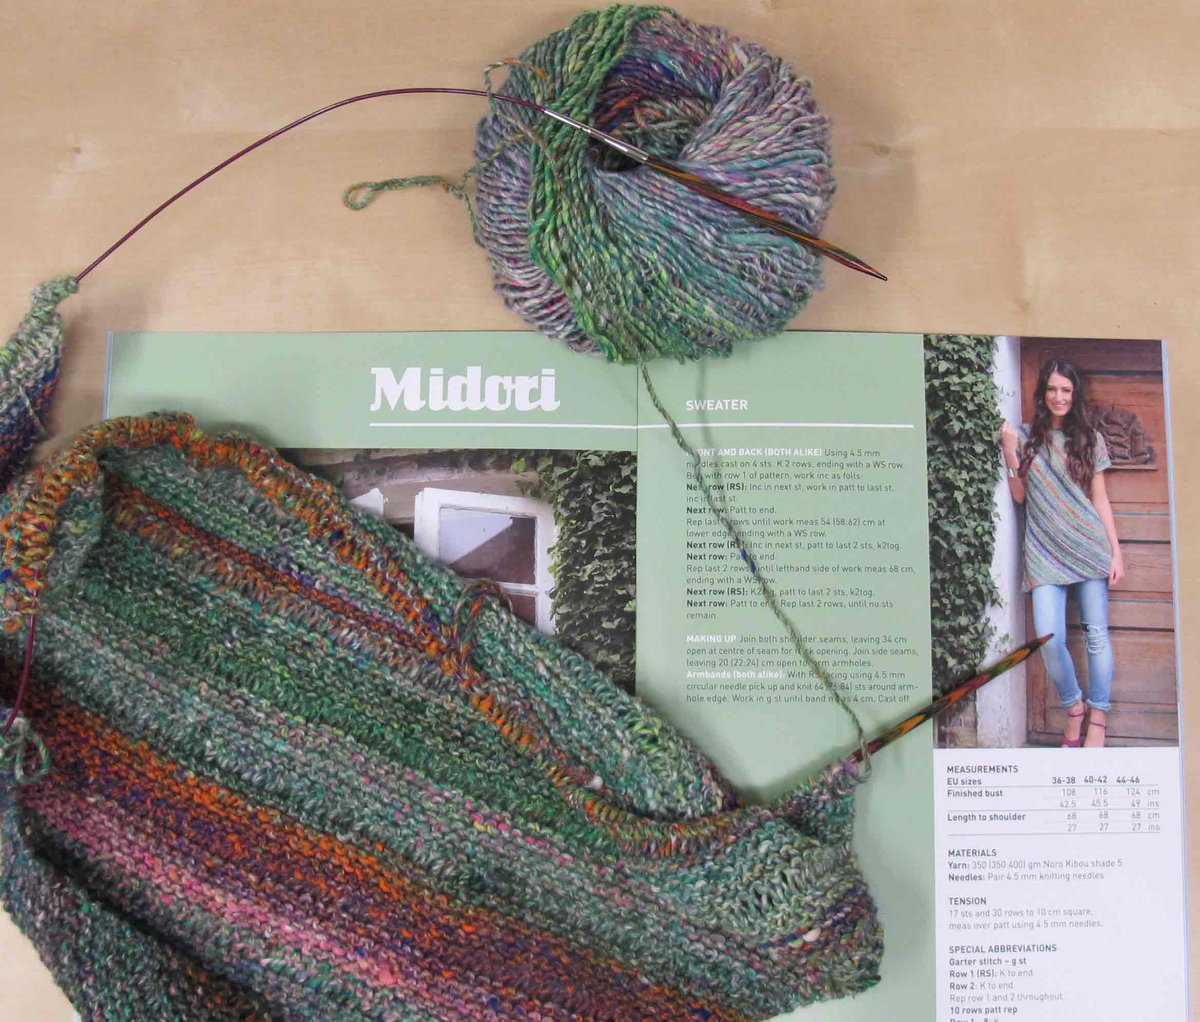 We're knitting today. Yarn - @NoroYarns Kibou. Pattern - Midori taken from Noro Kibou pattern book.